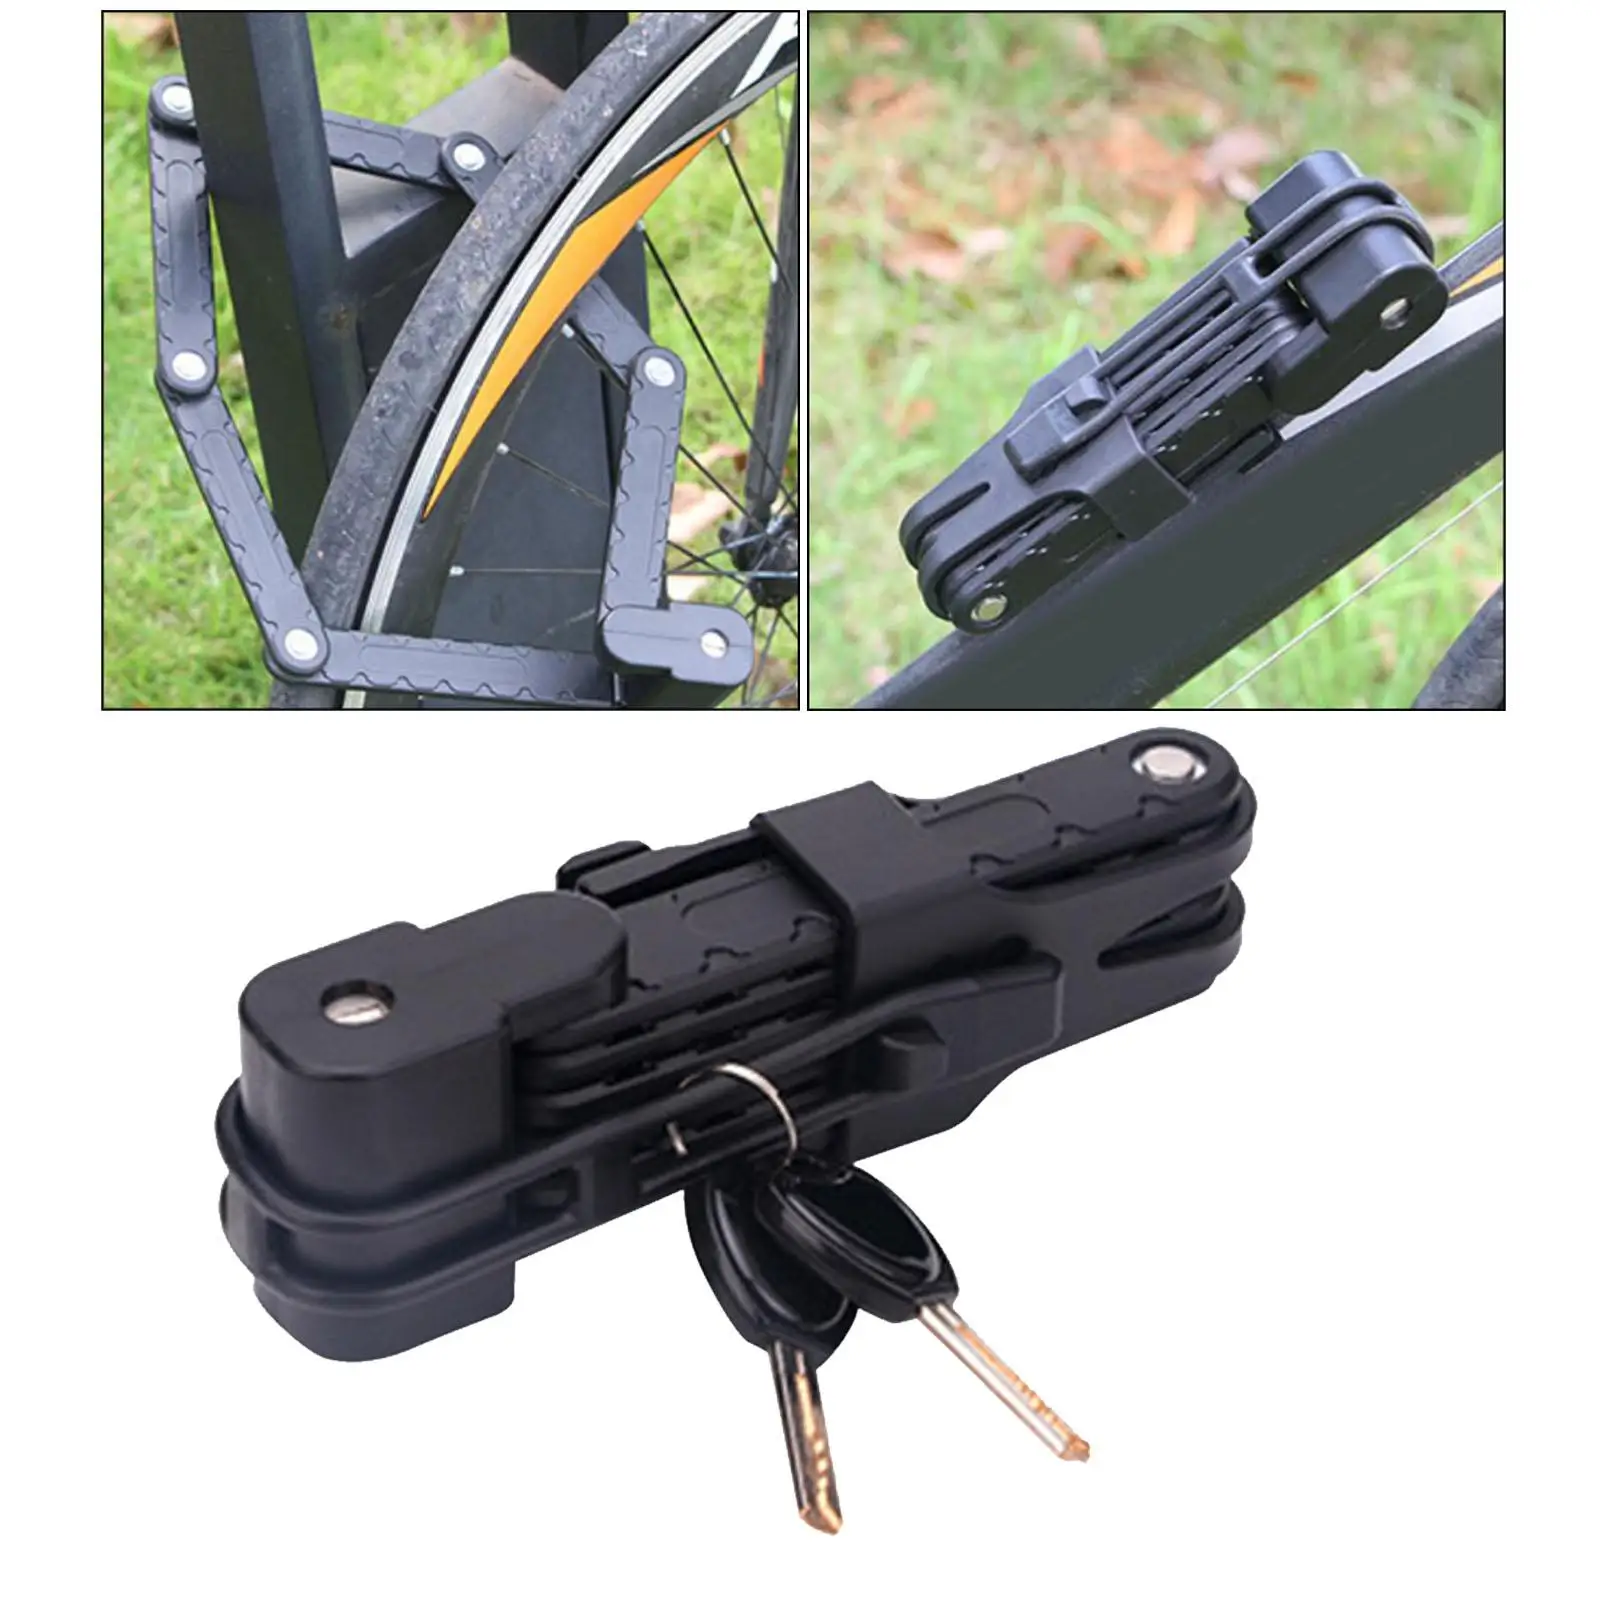 Steel Lightweight Key Folding Bike Lock, Steel Joints Bike Lock High Security Hardened Steel with two keys and Accessories